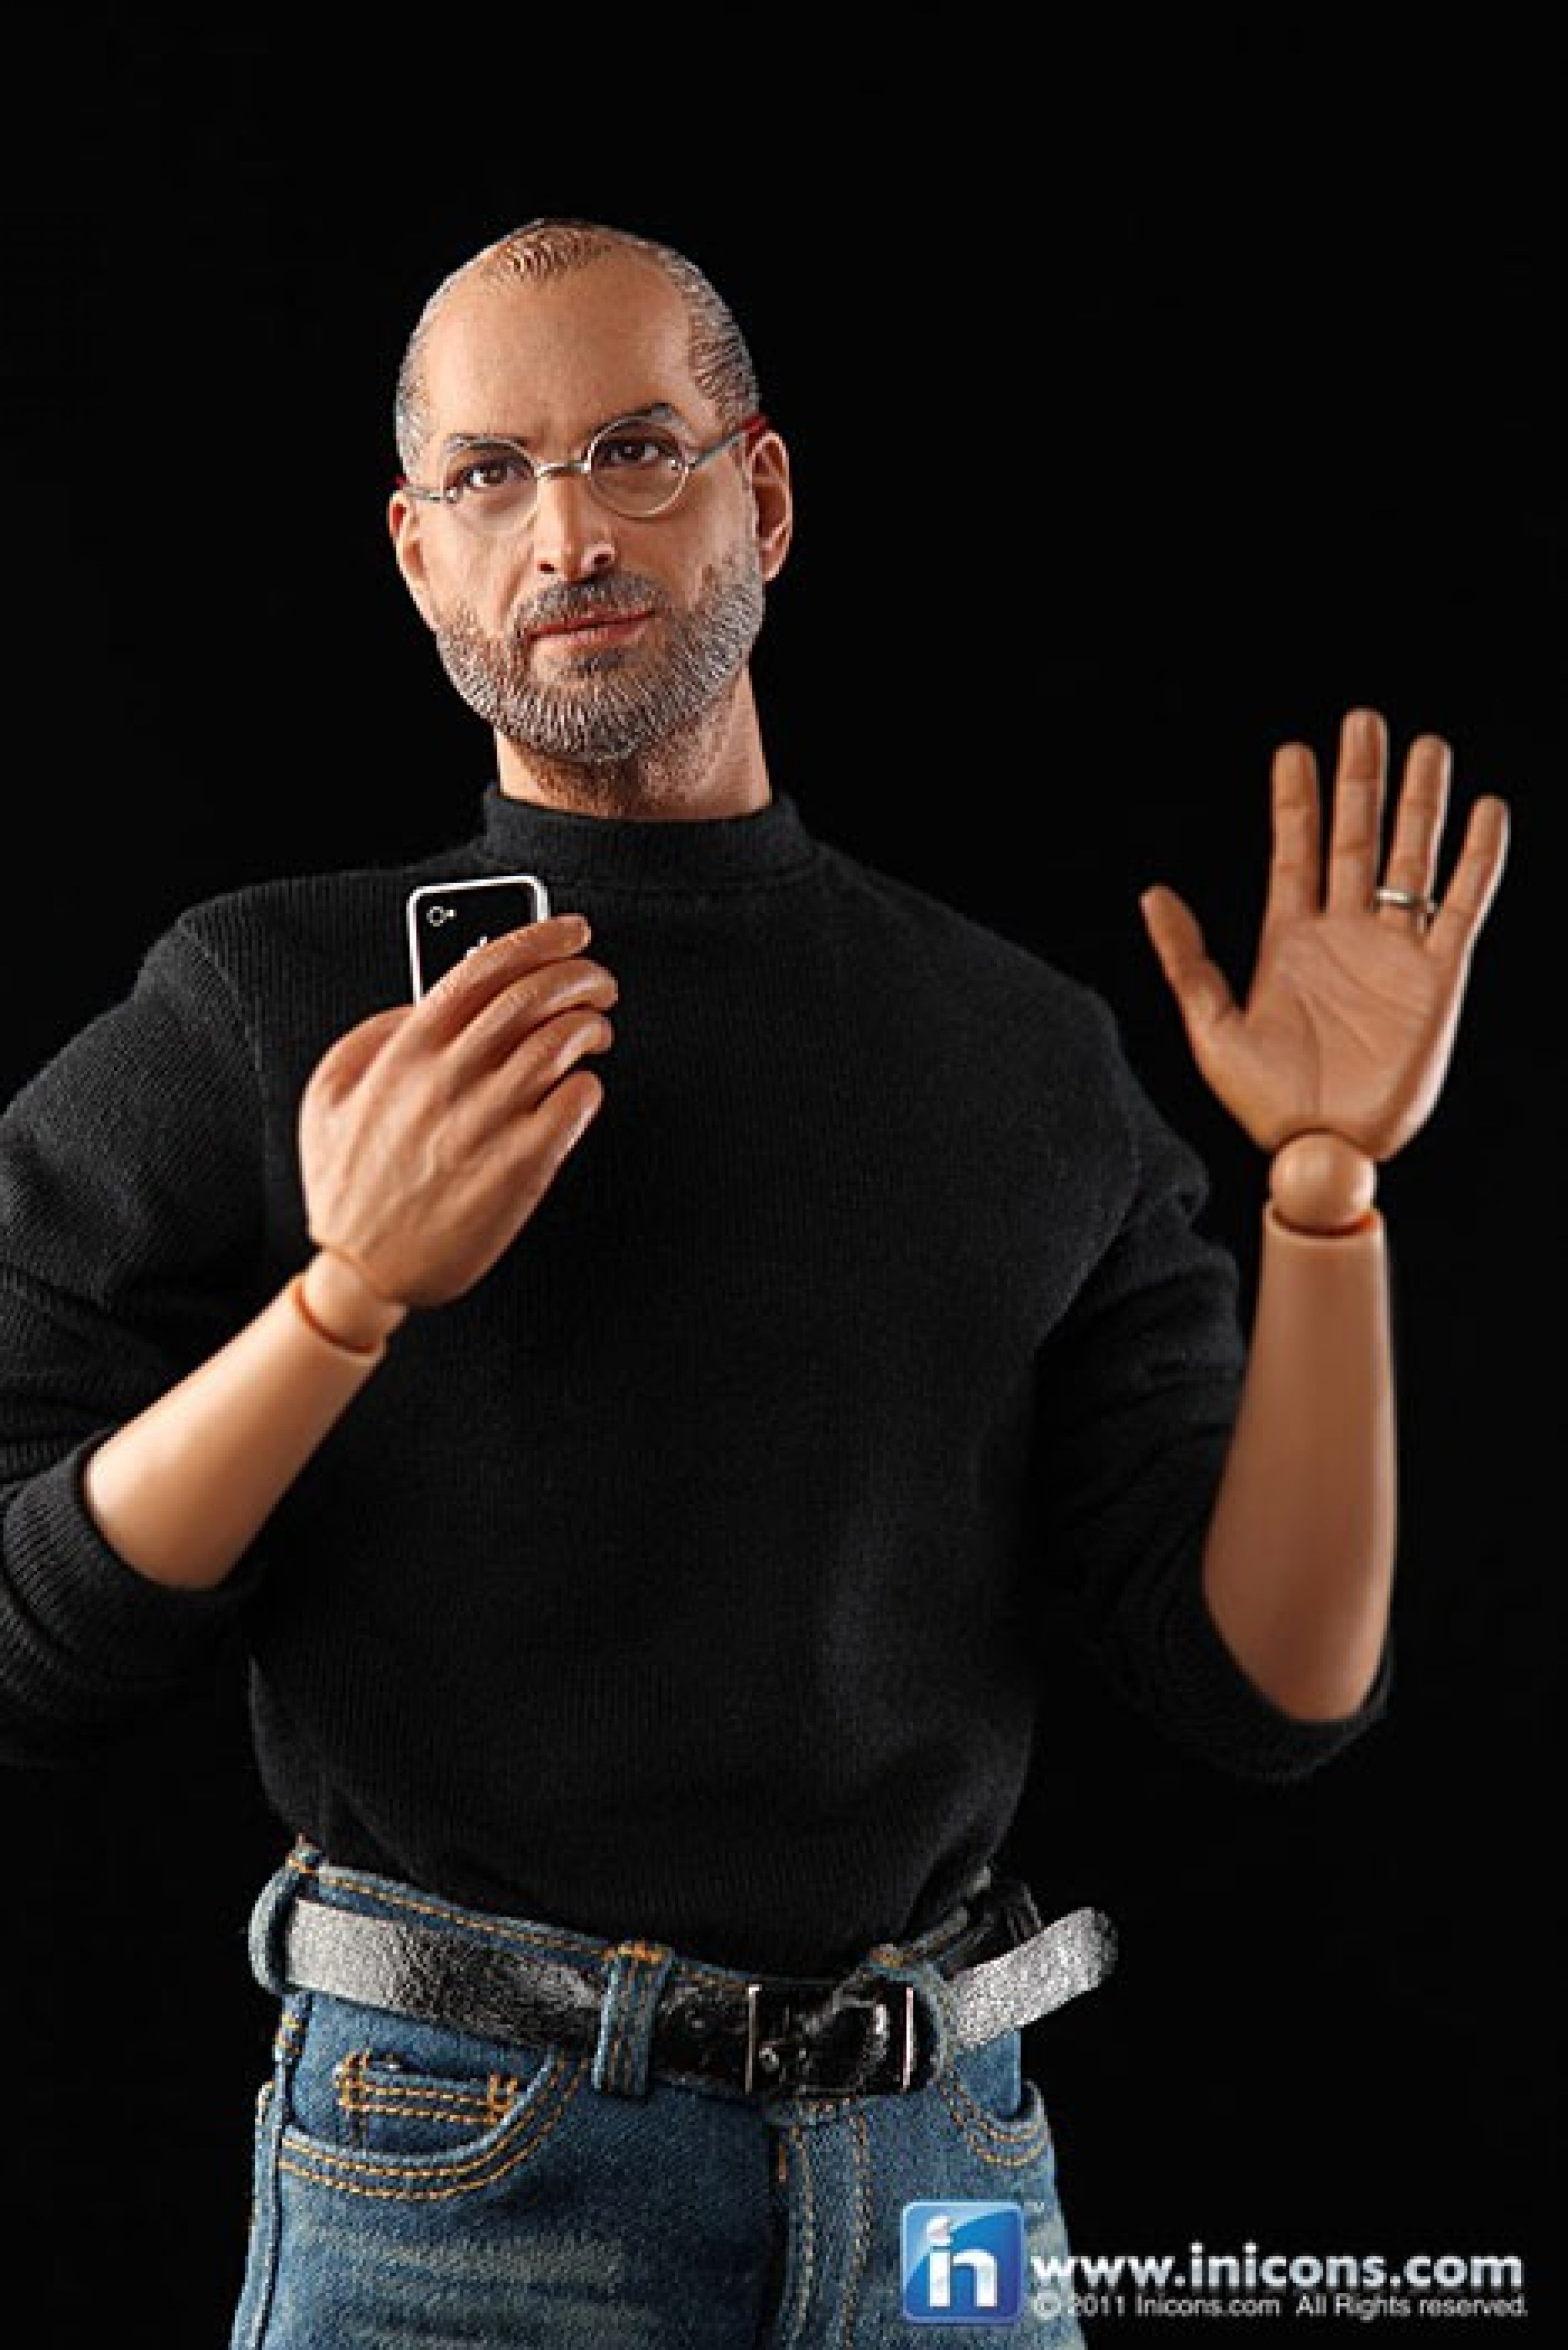 Steve Jobs Doll 